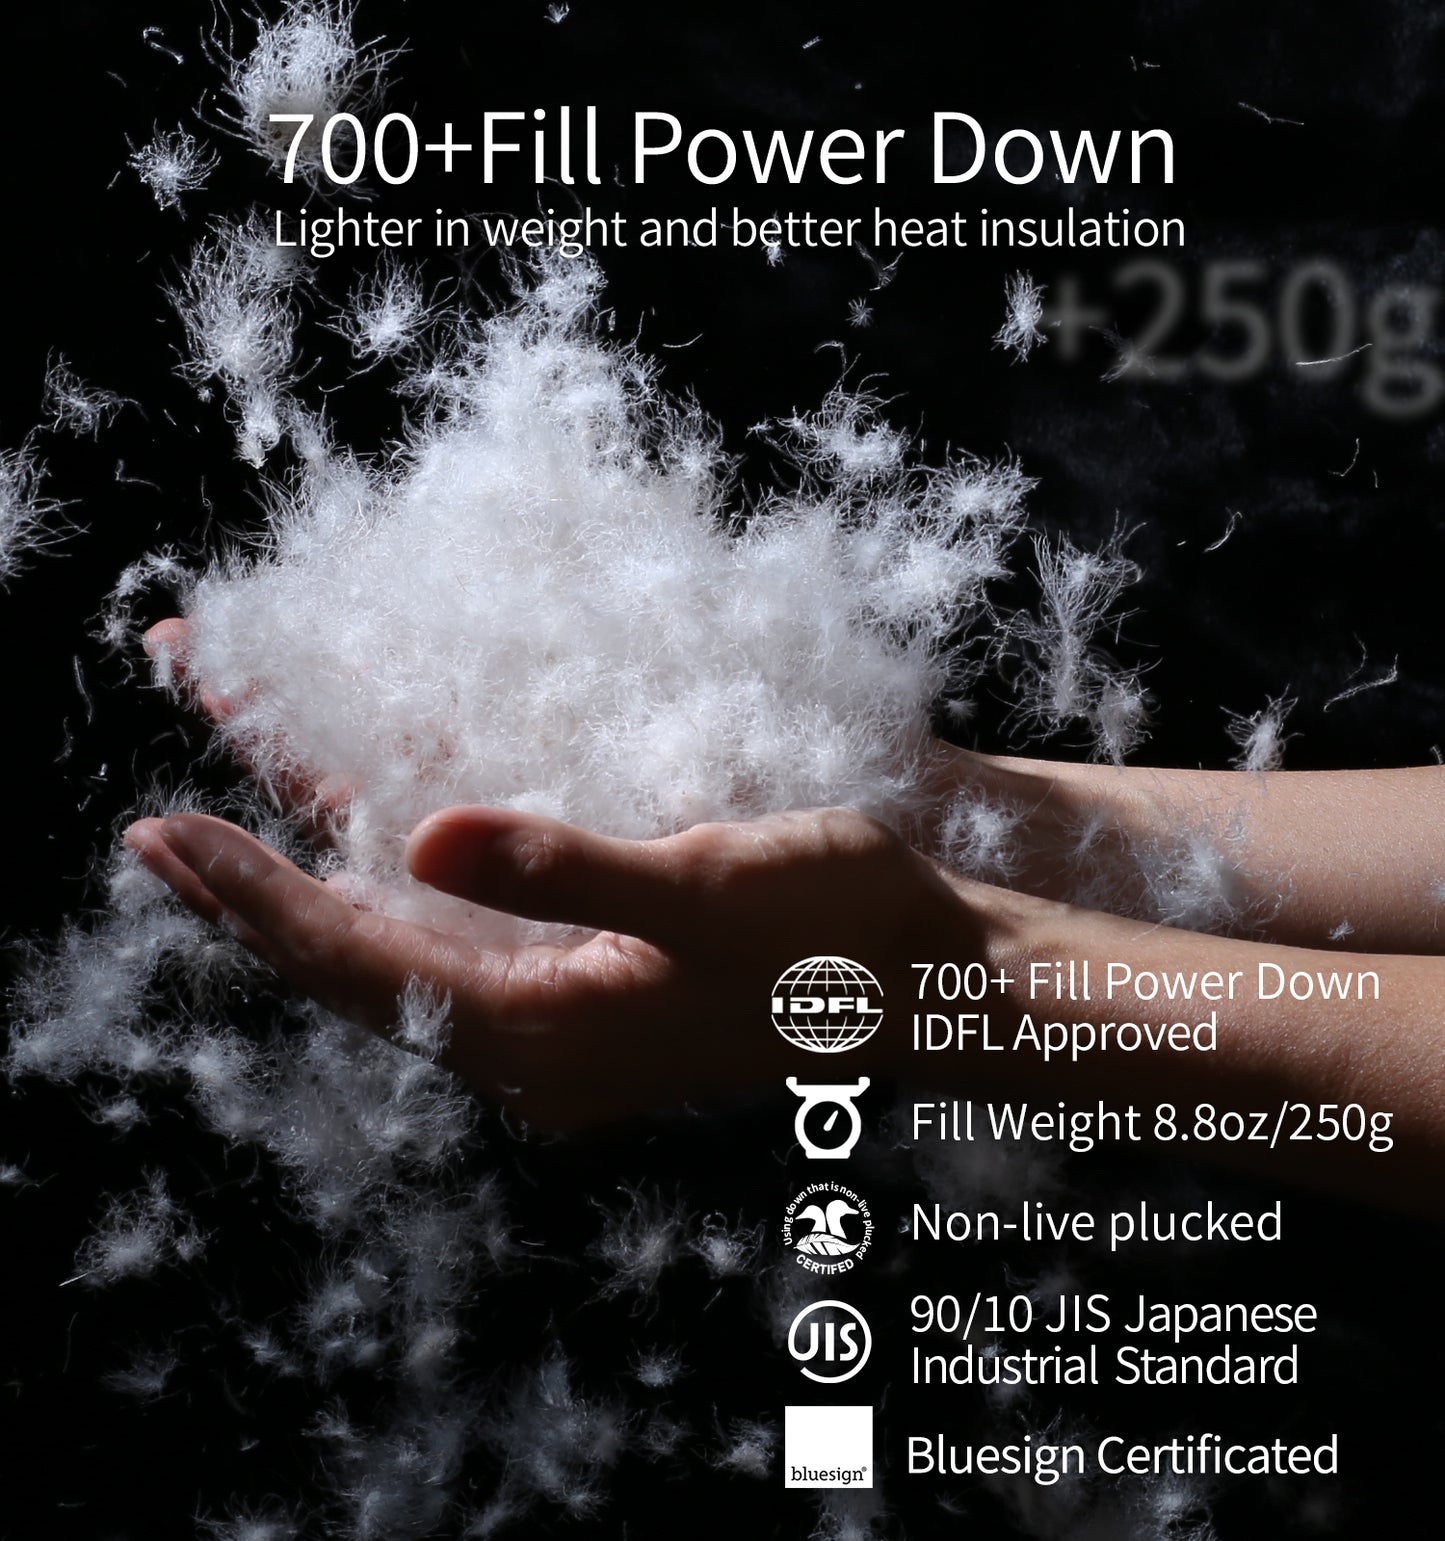 [C2102] 1.4 lbs / 630g 700 Fill Power Down Ultra Air Mummy Sleeping Bag, 37-59°F/ 3-15°C